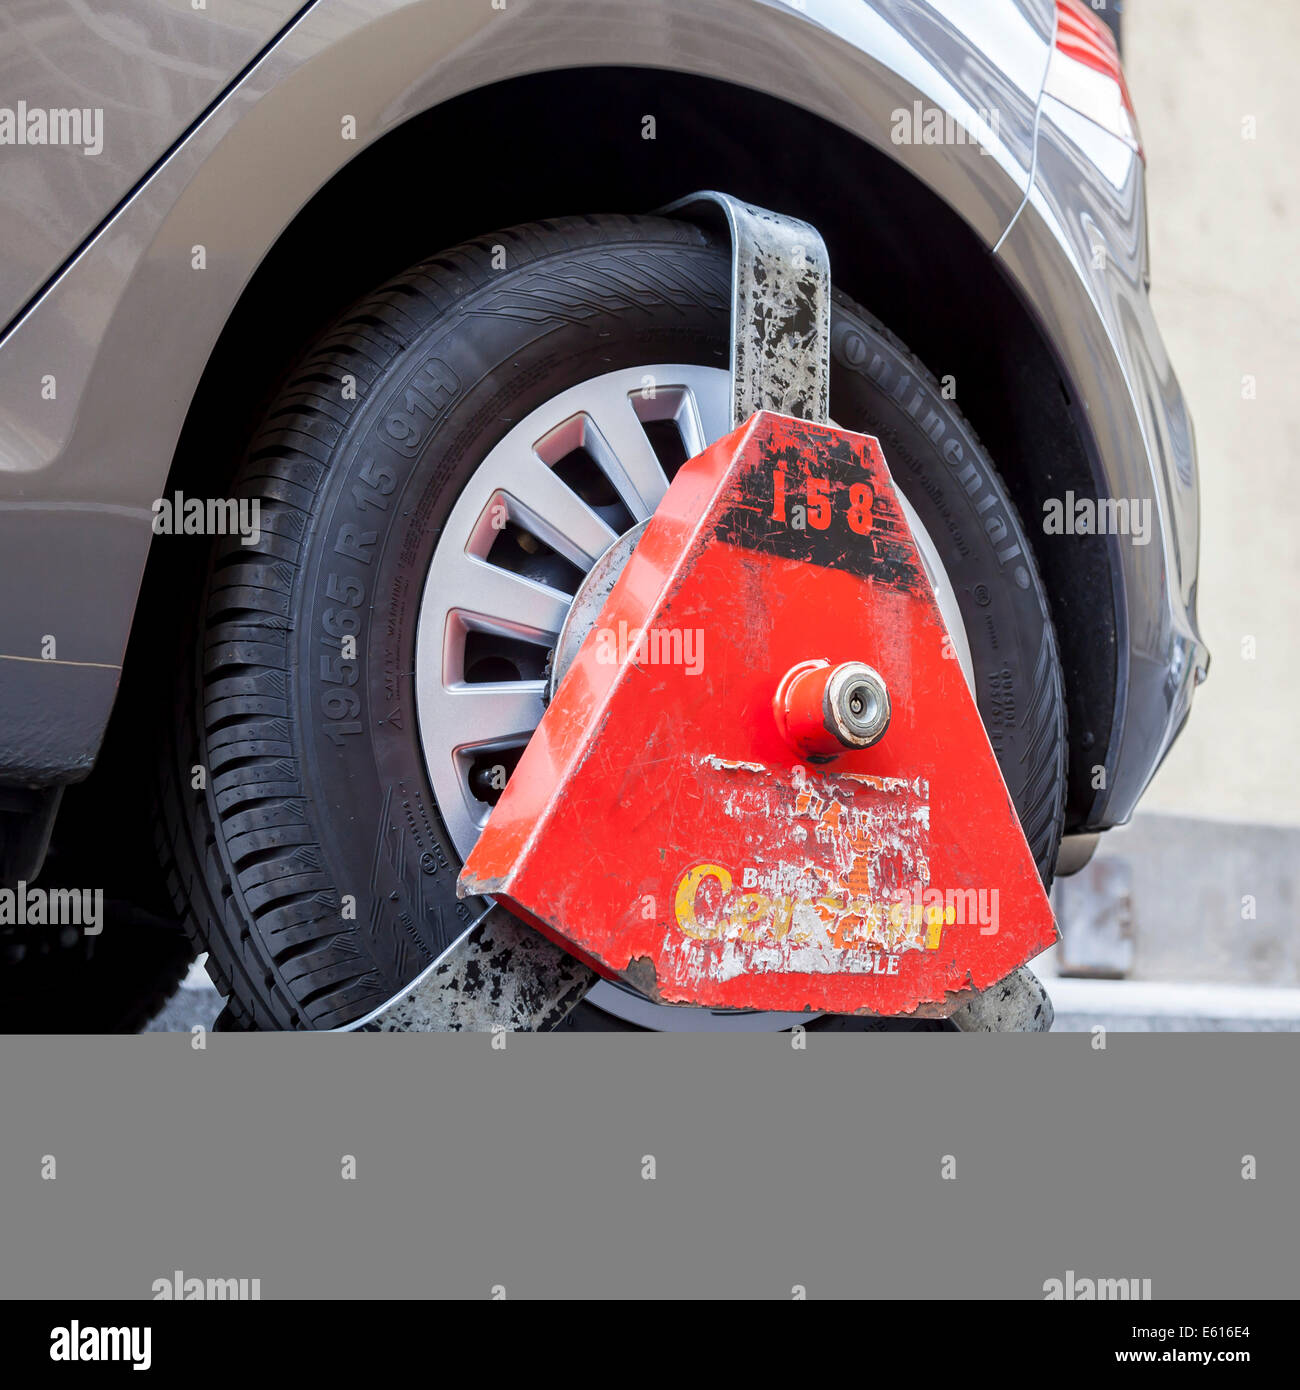 Berlin Parkkralle Wheel Clamp Stock Photo - Alamy